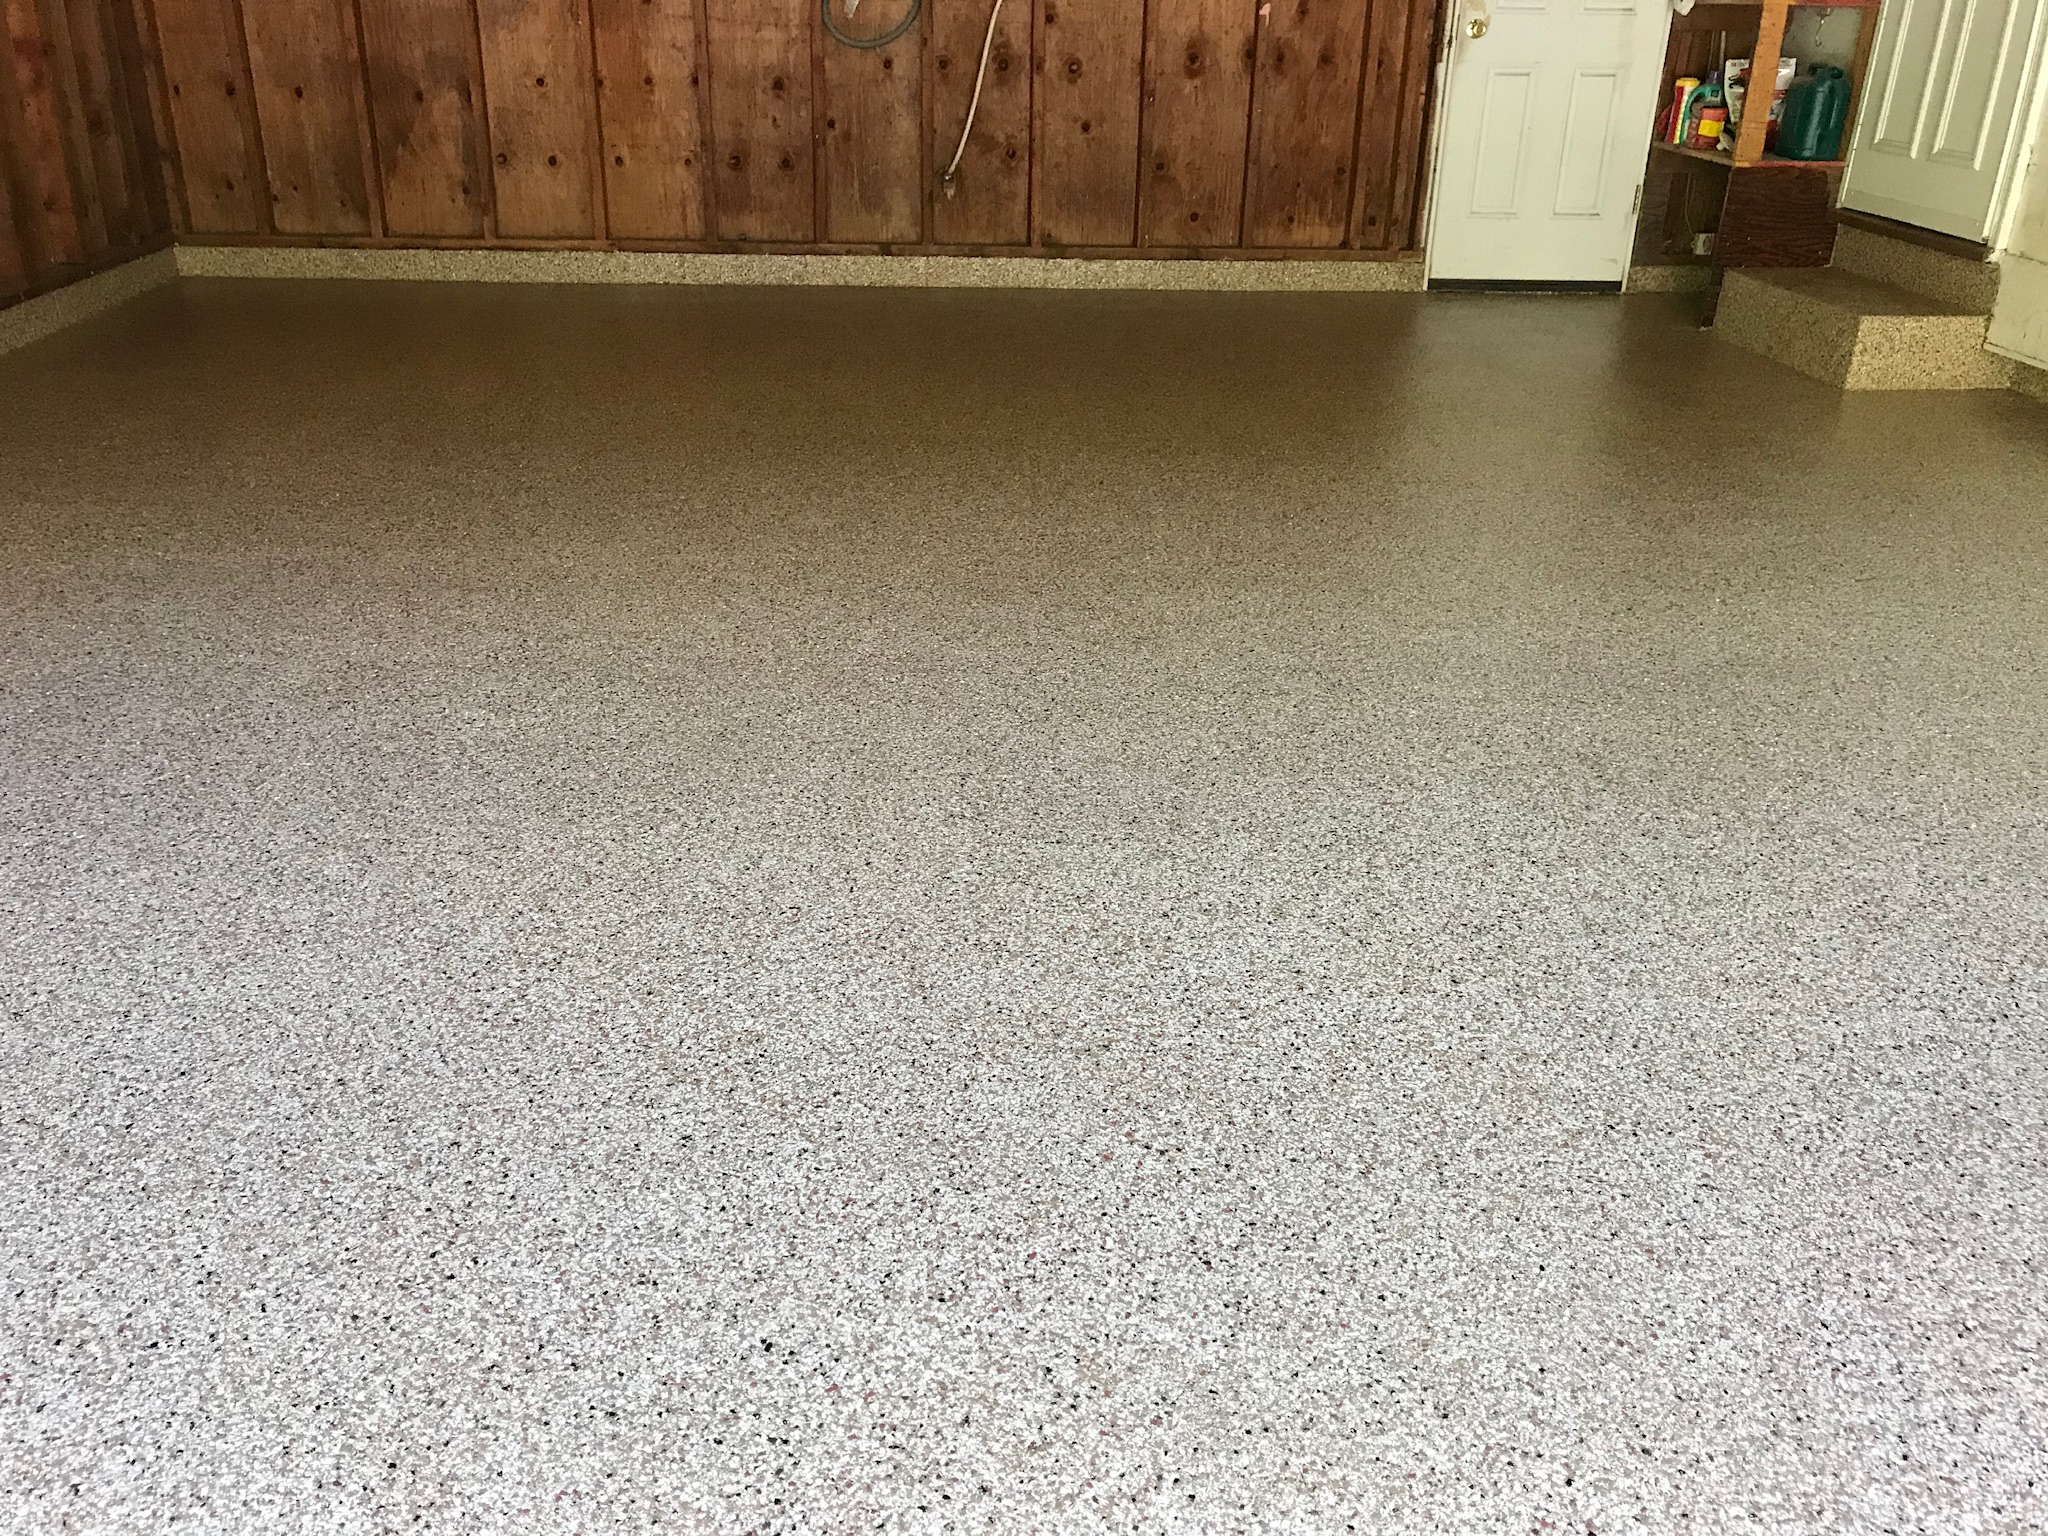 New Polyurea Garage Floor Coating - CCS MN Projects